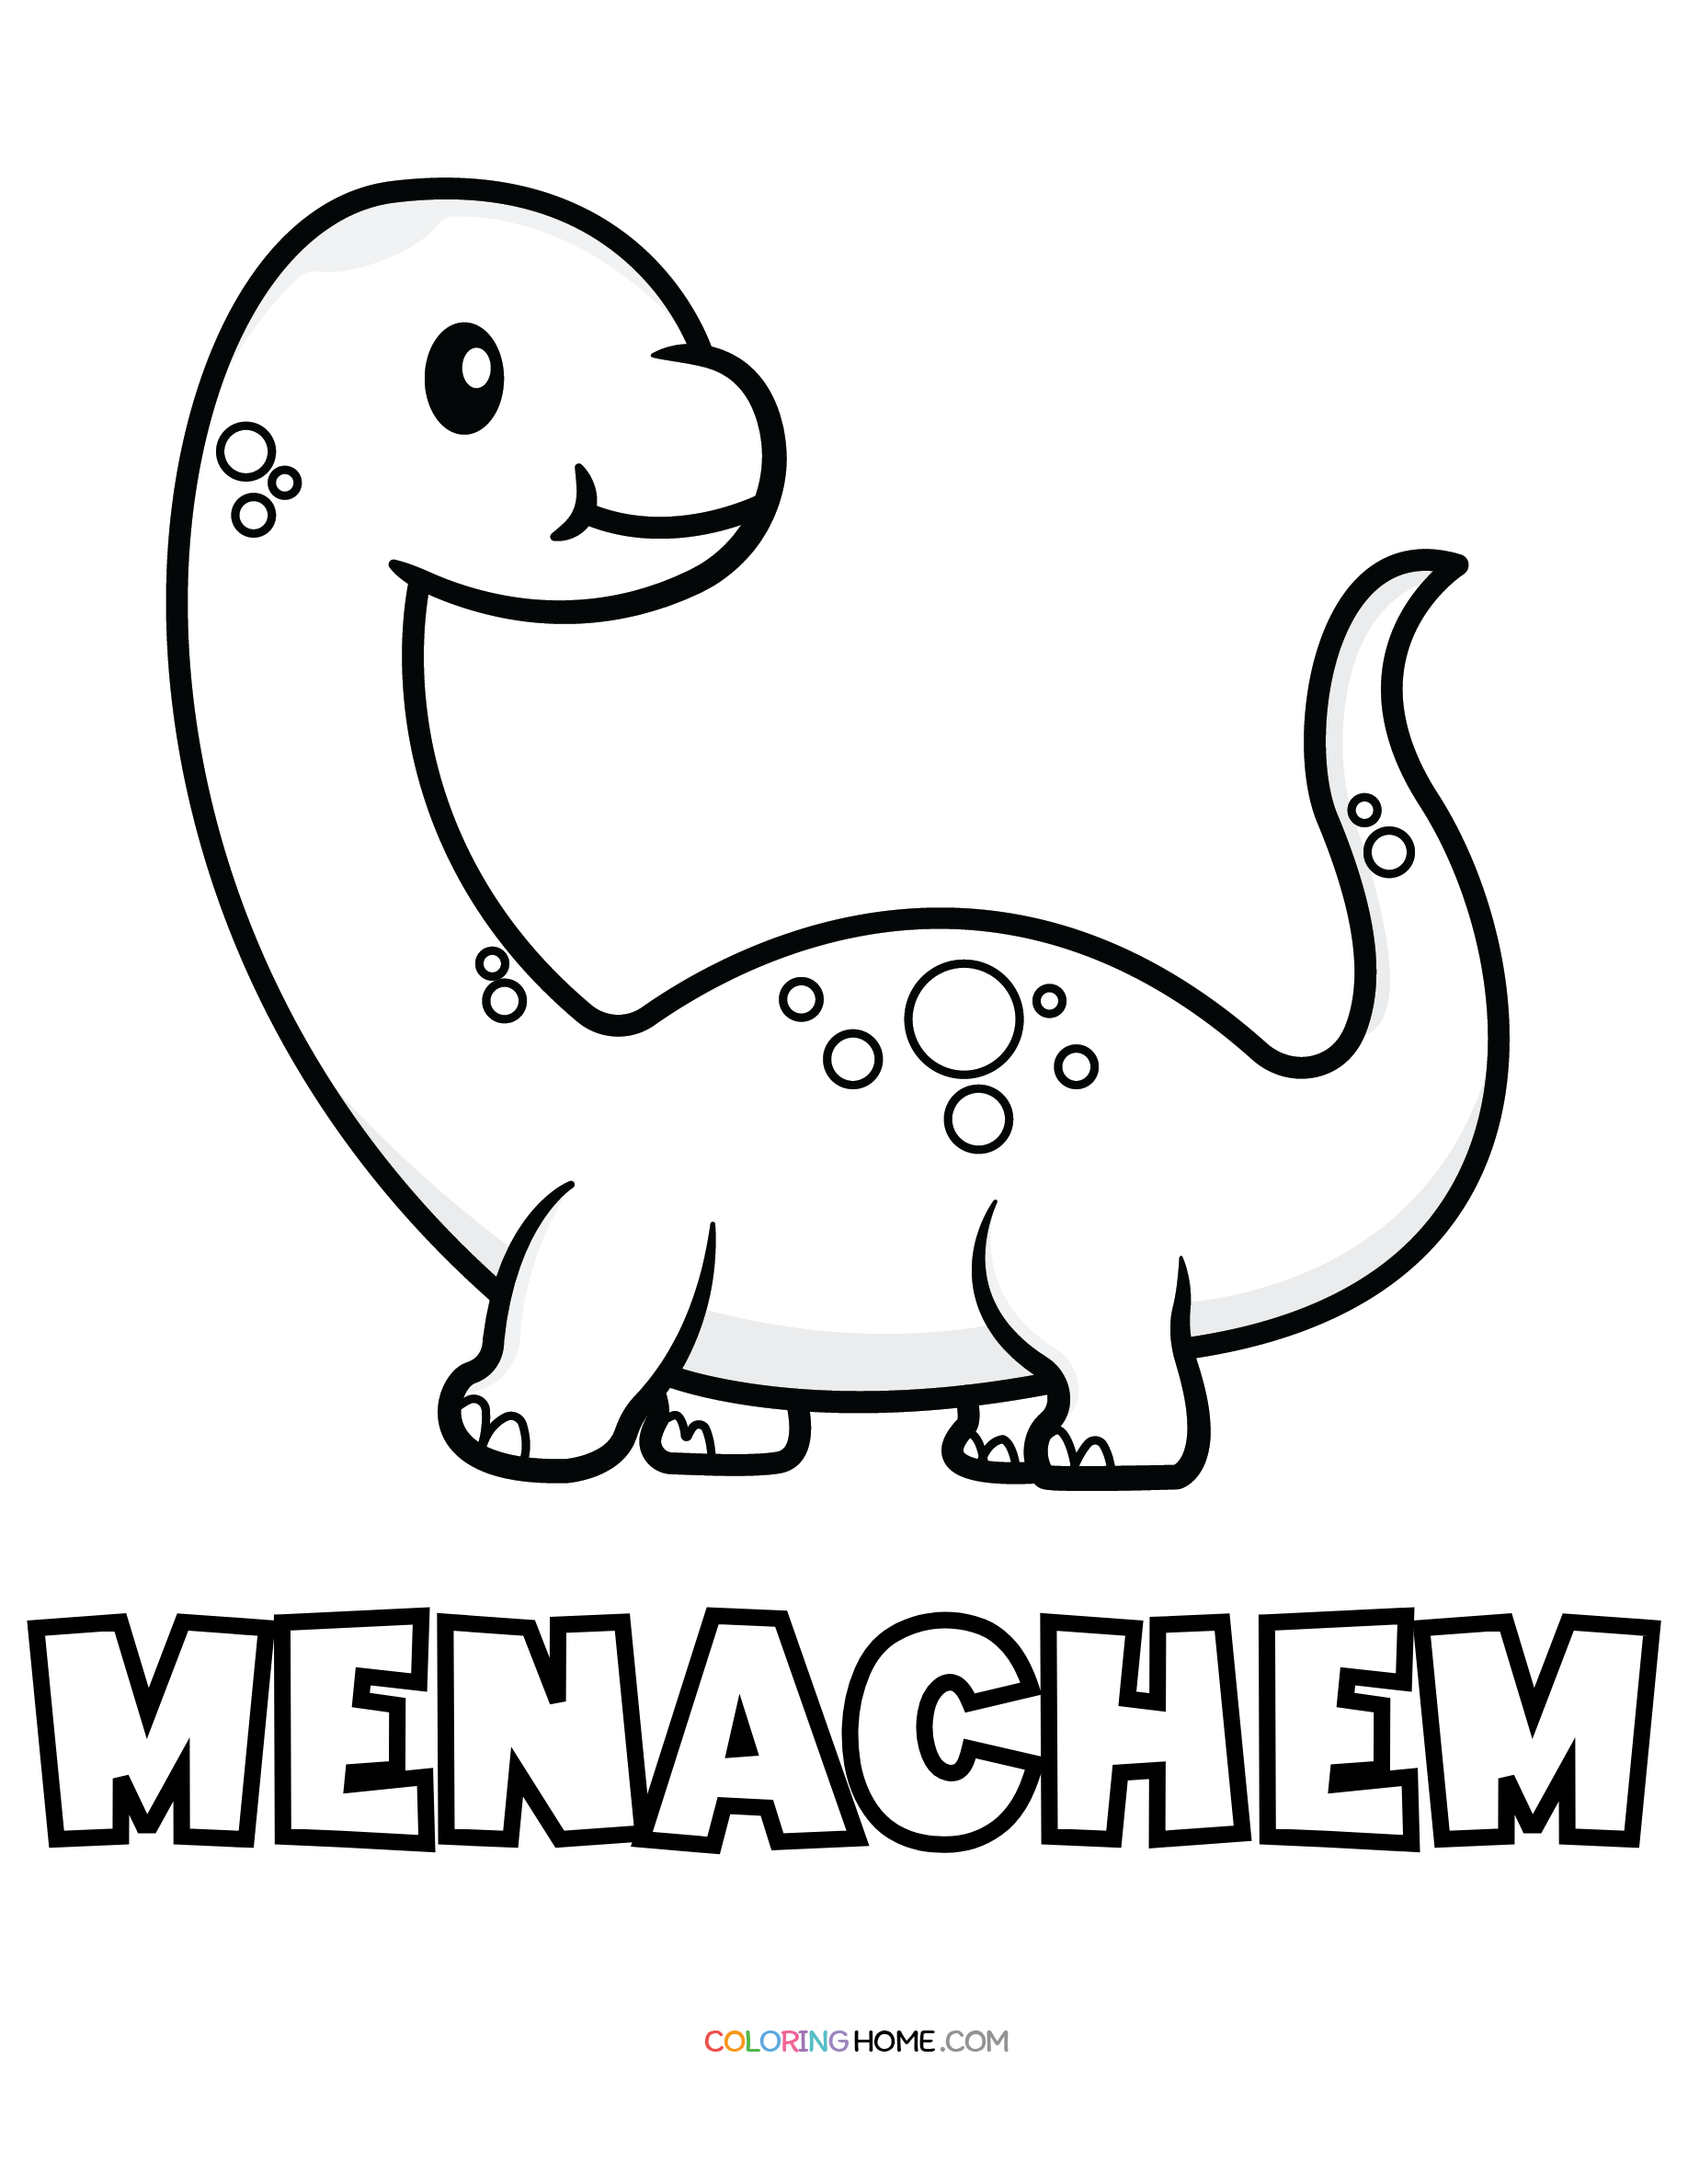 Menachem dinosaur coloring page